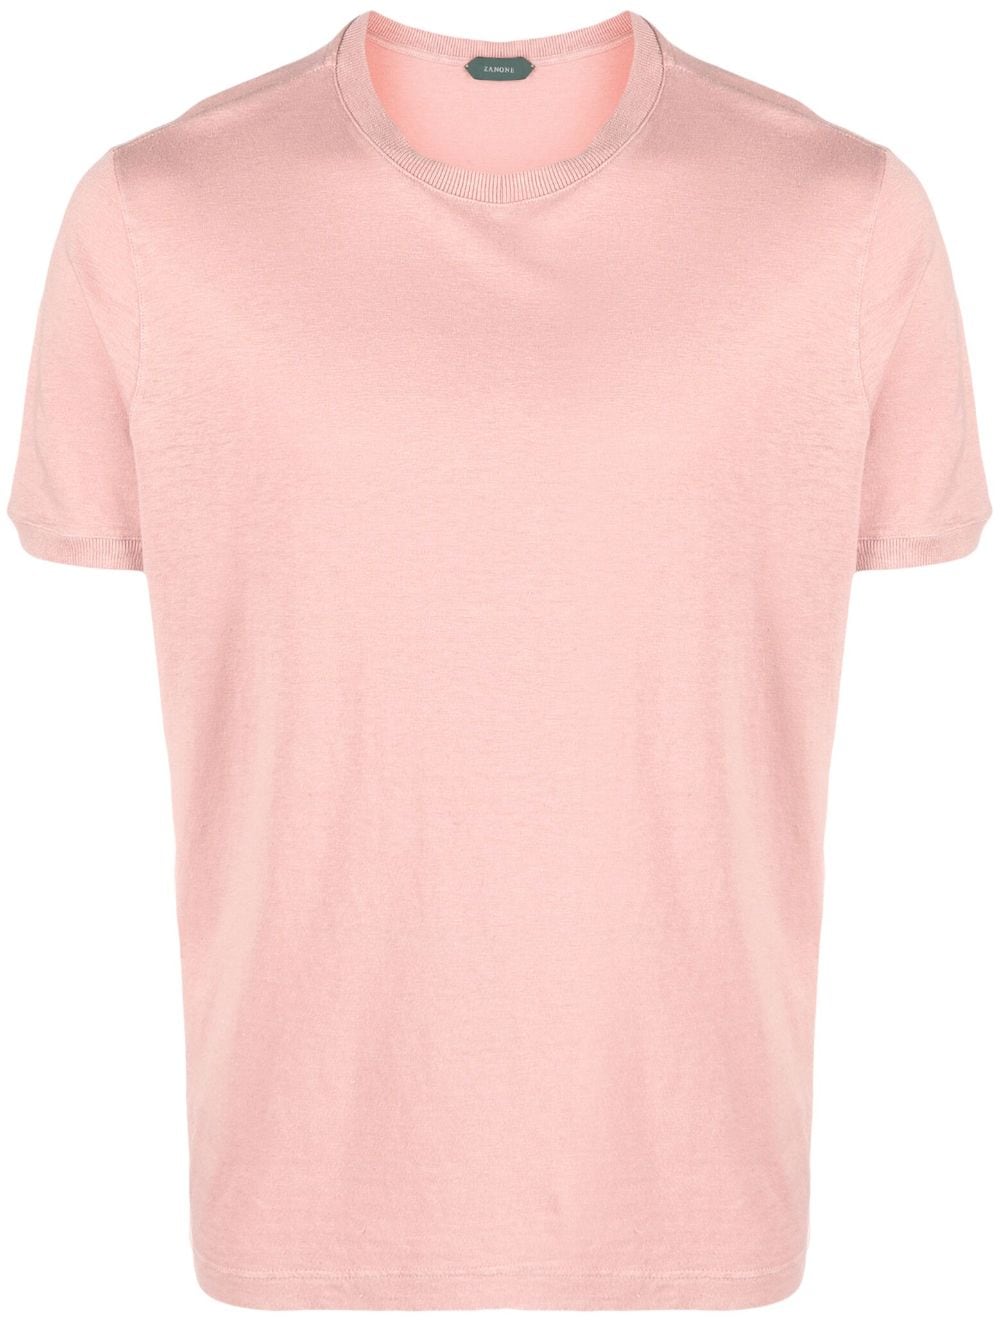 zanone t-shirt à manches courtes - rose